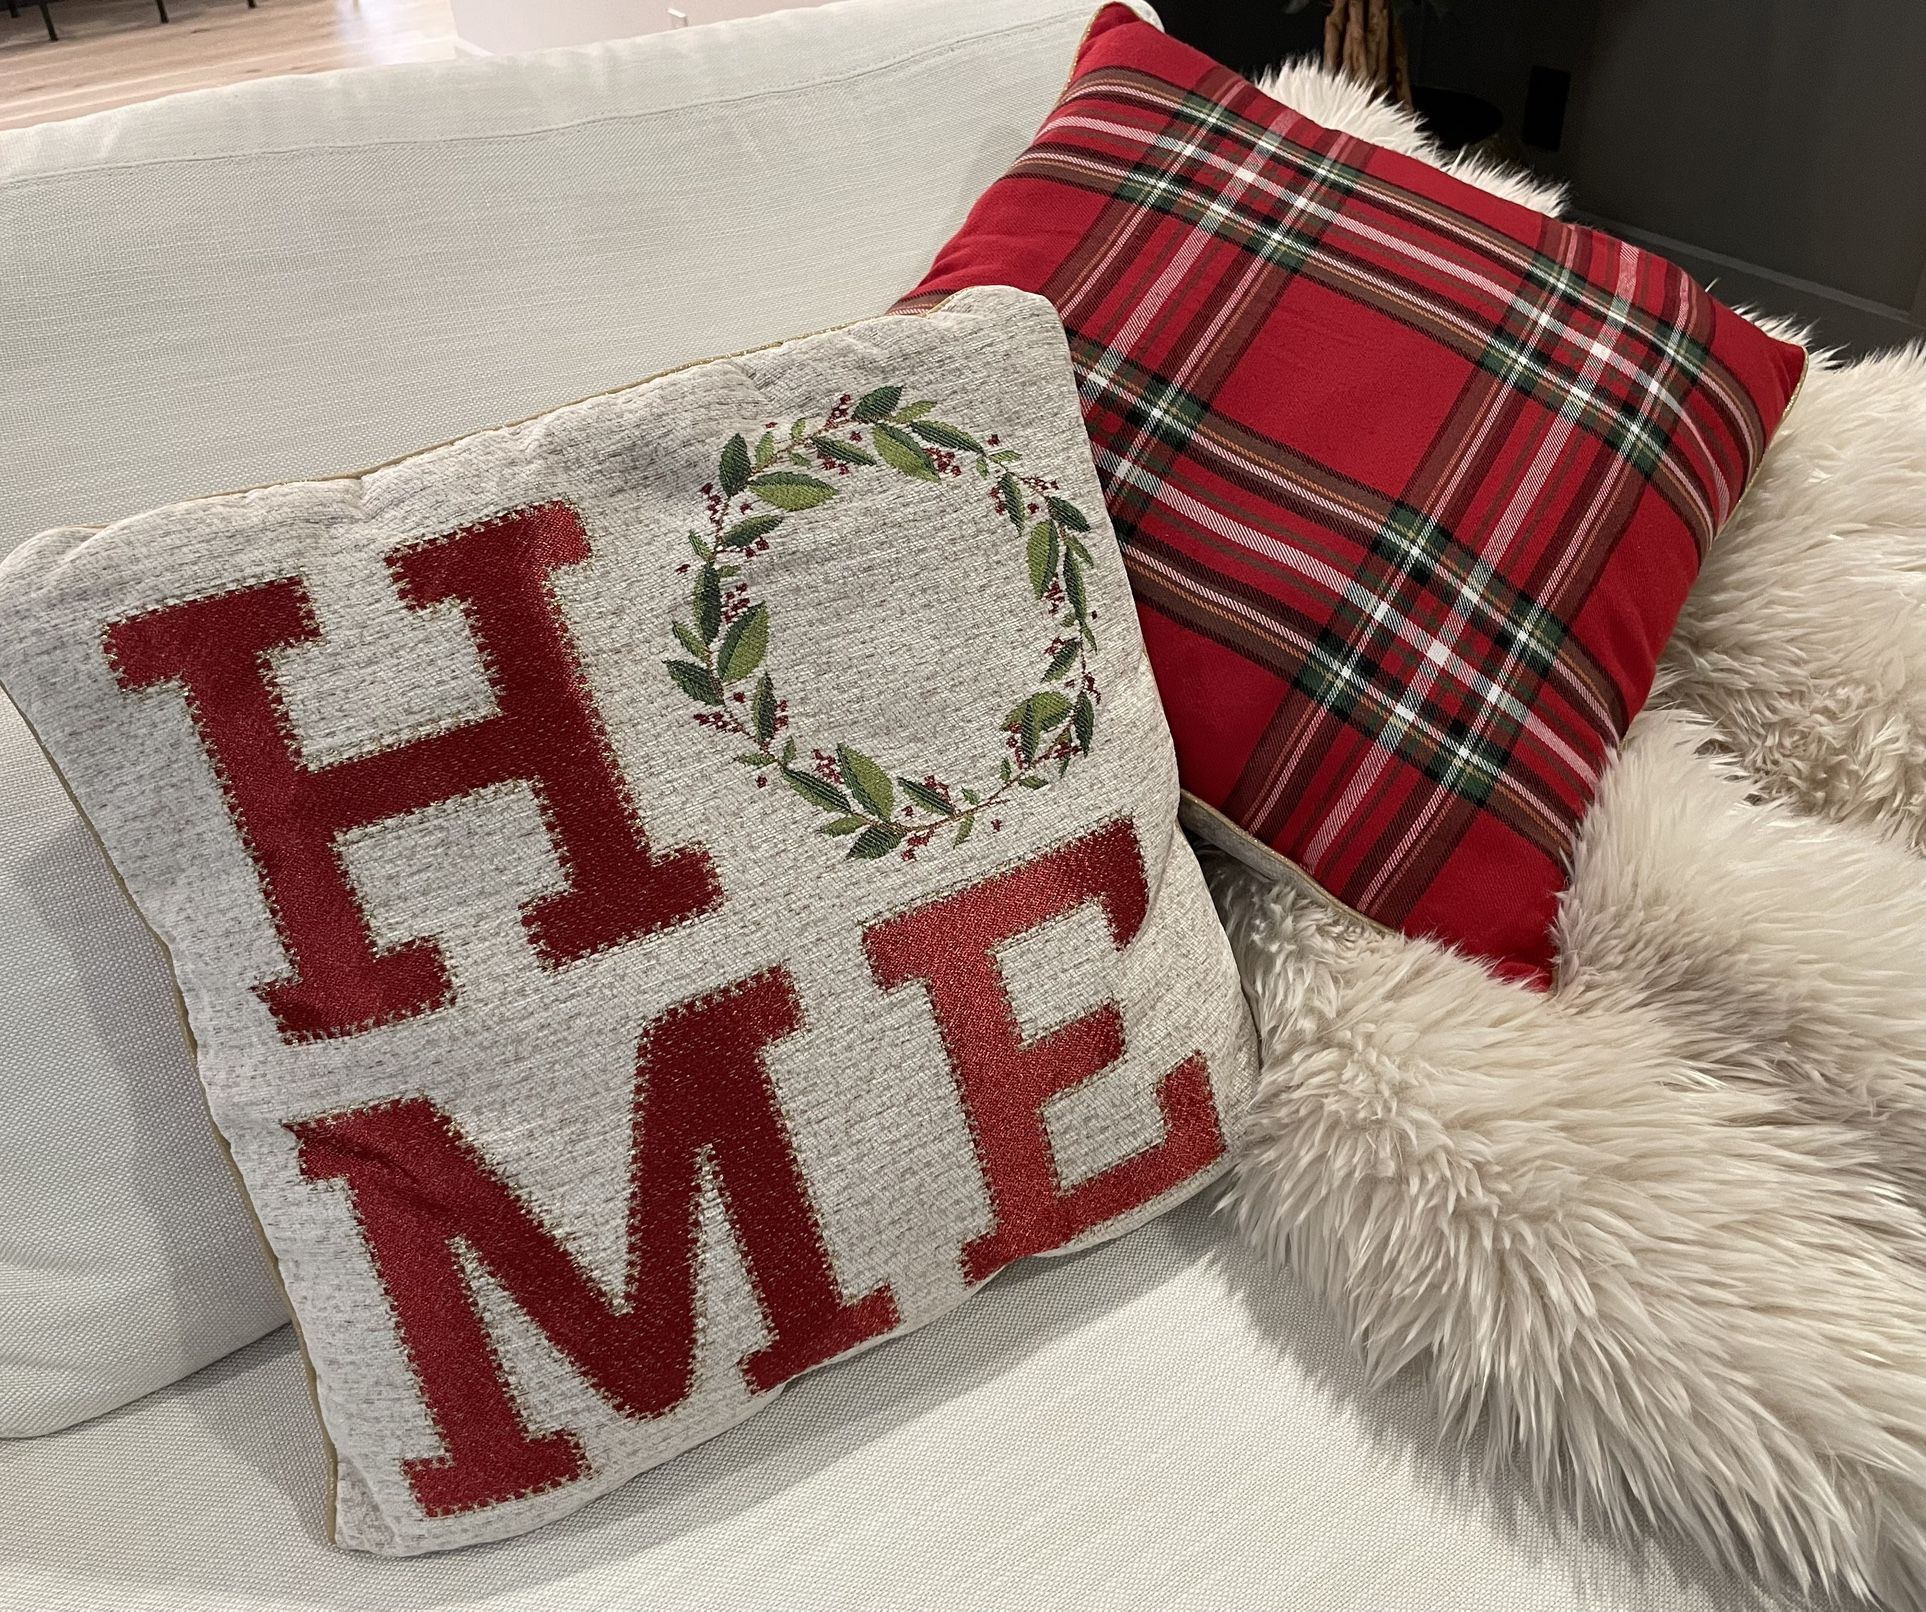 Decorative Christmas Pillows 